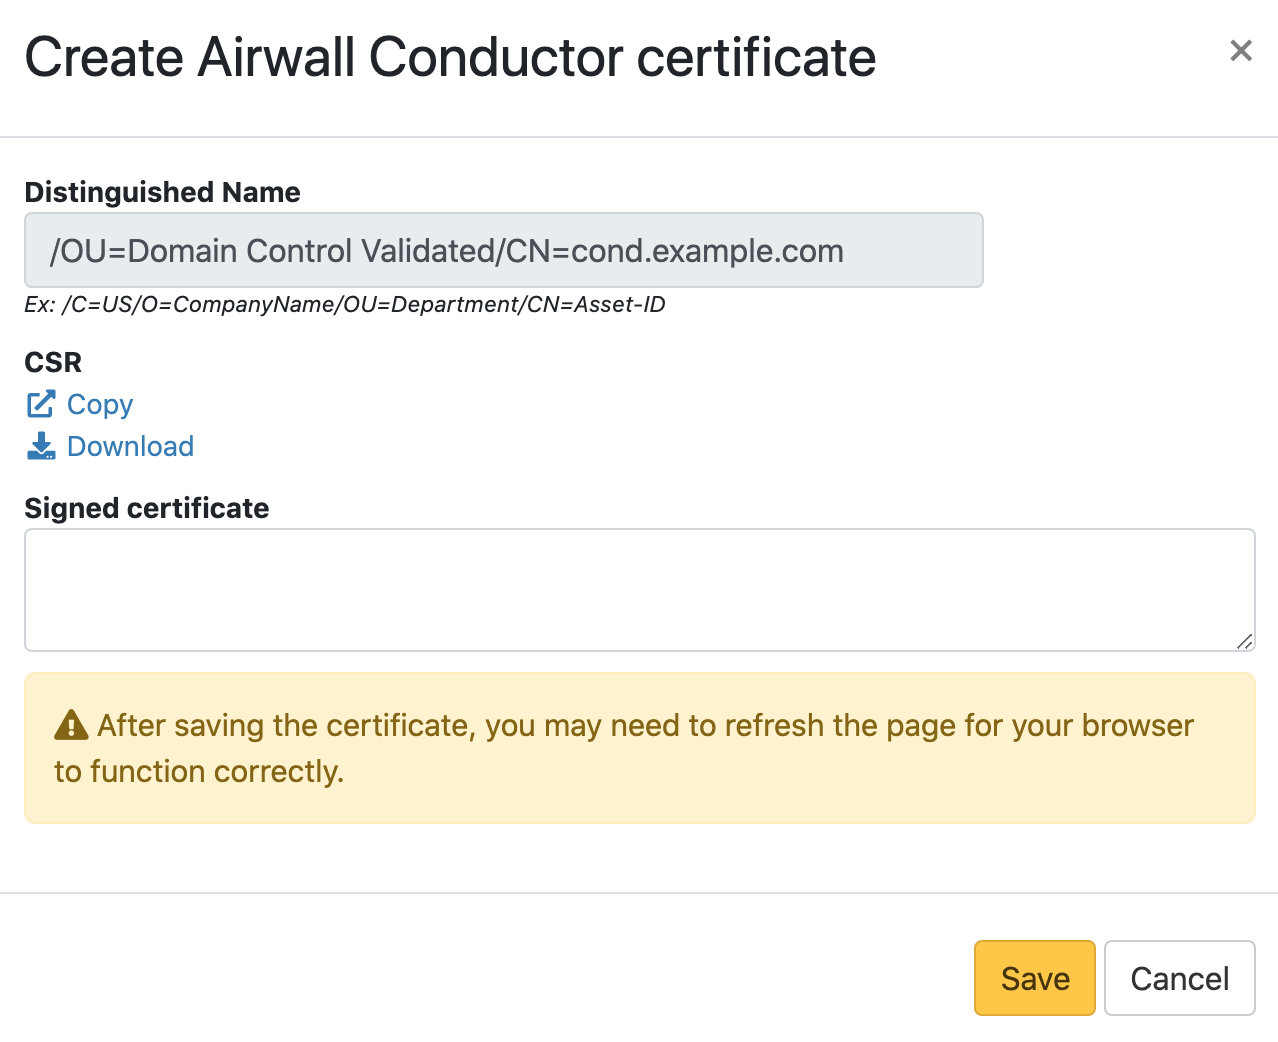 Create Airwall Conductor certificate dialog